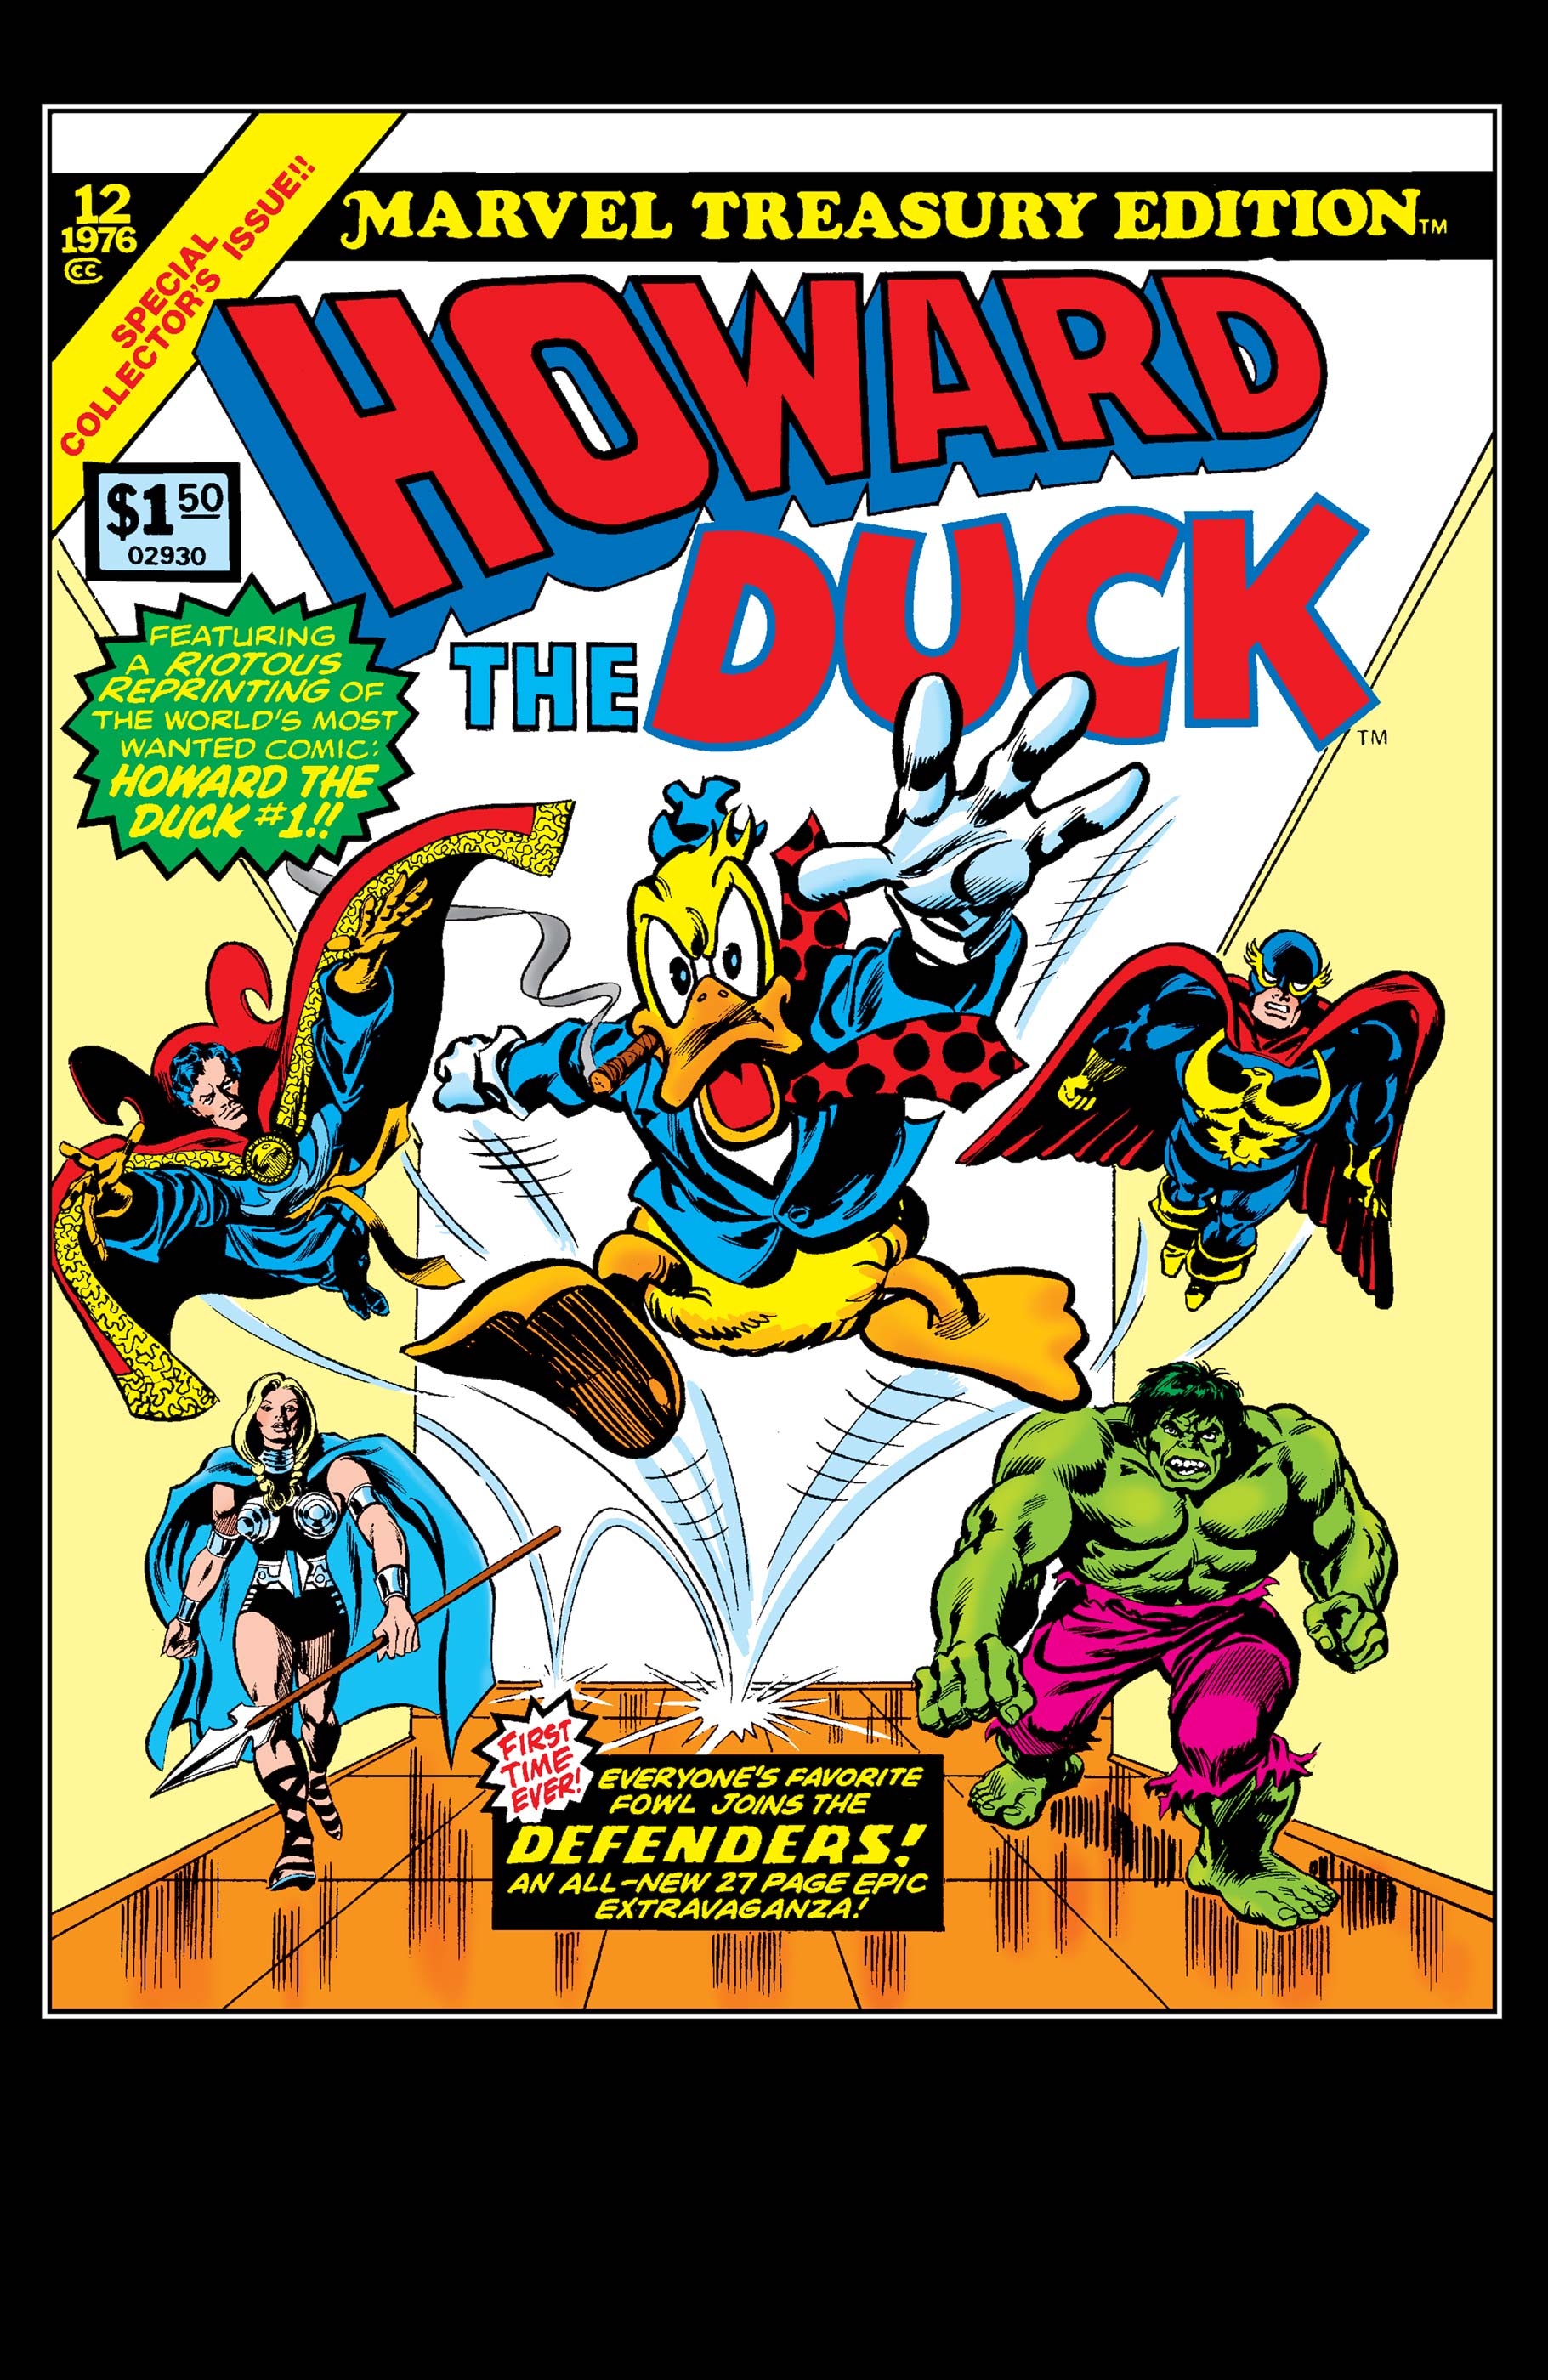 Marvel Treasury Edition (1974) #12